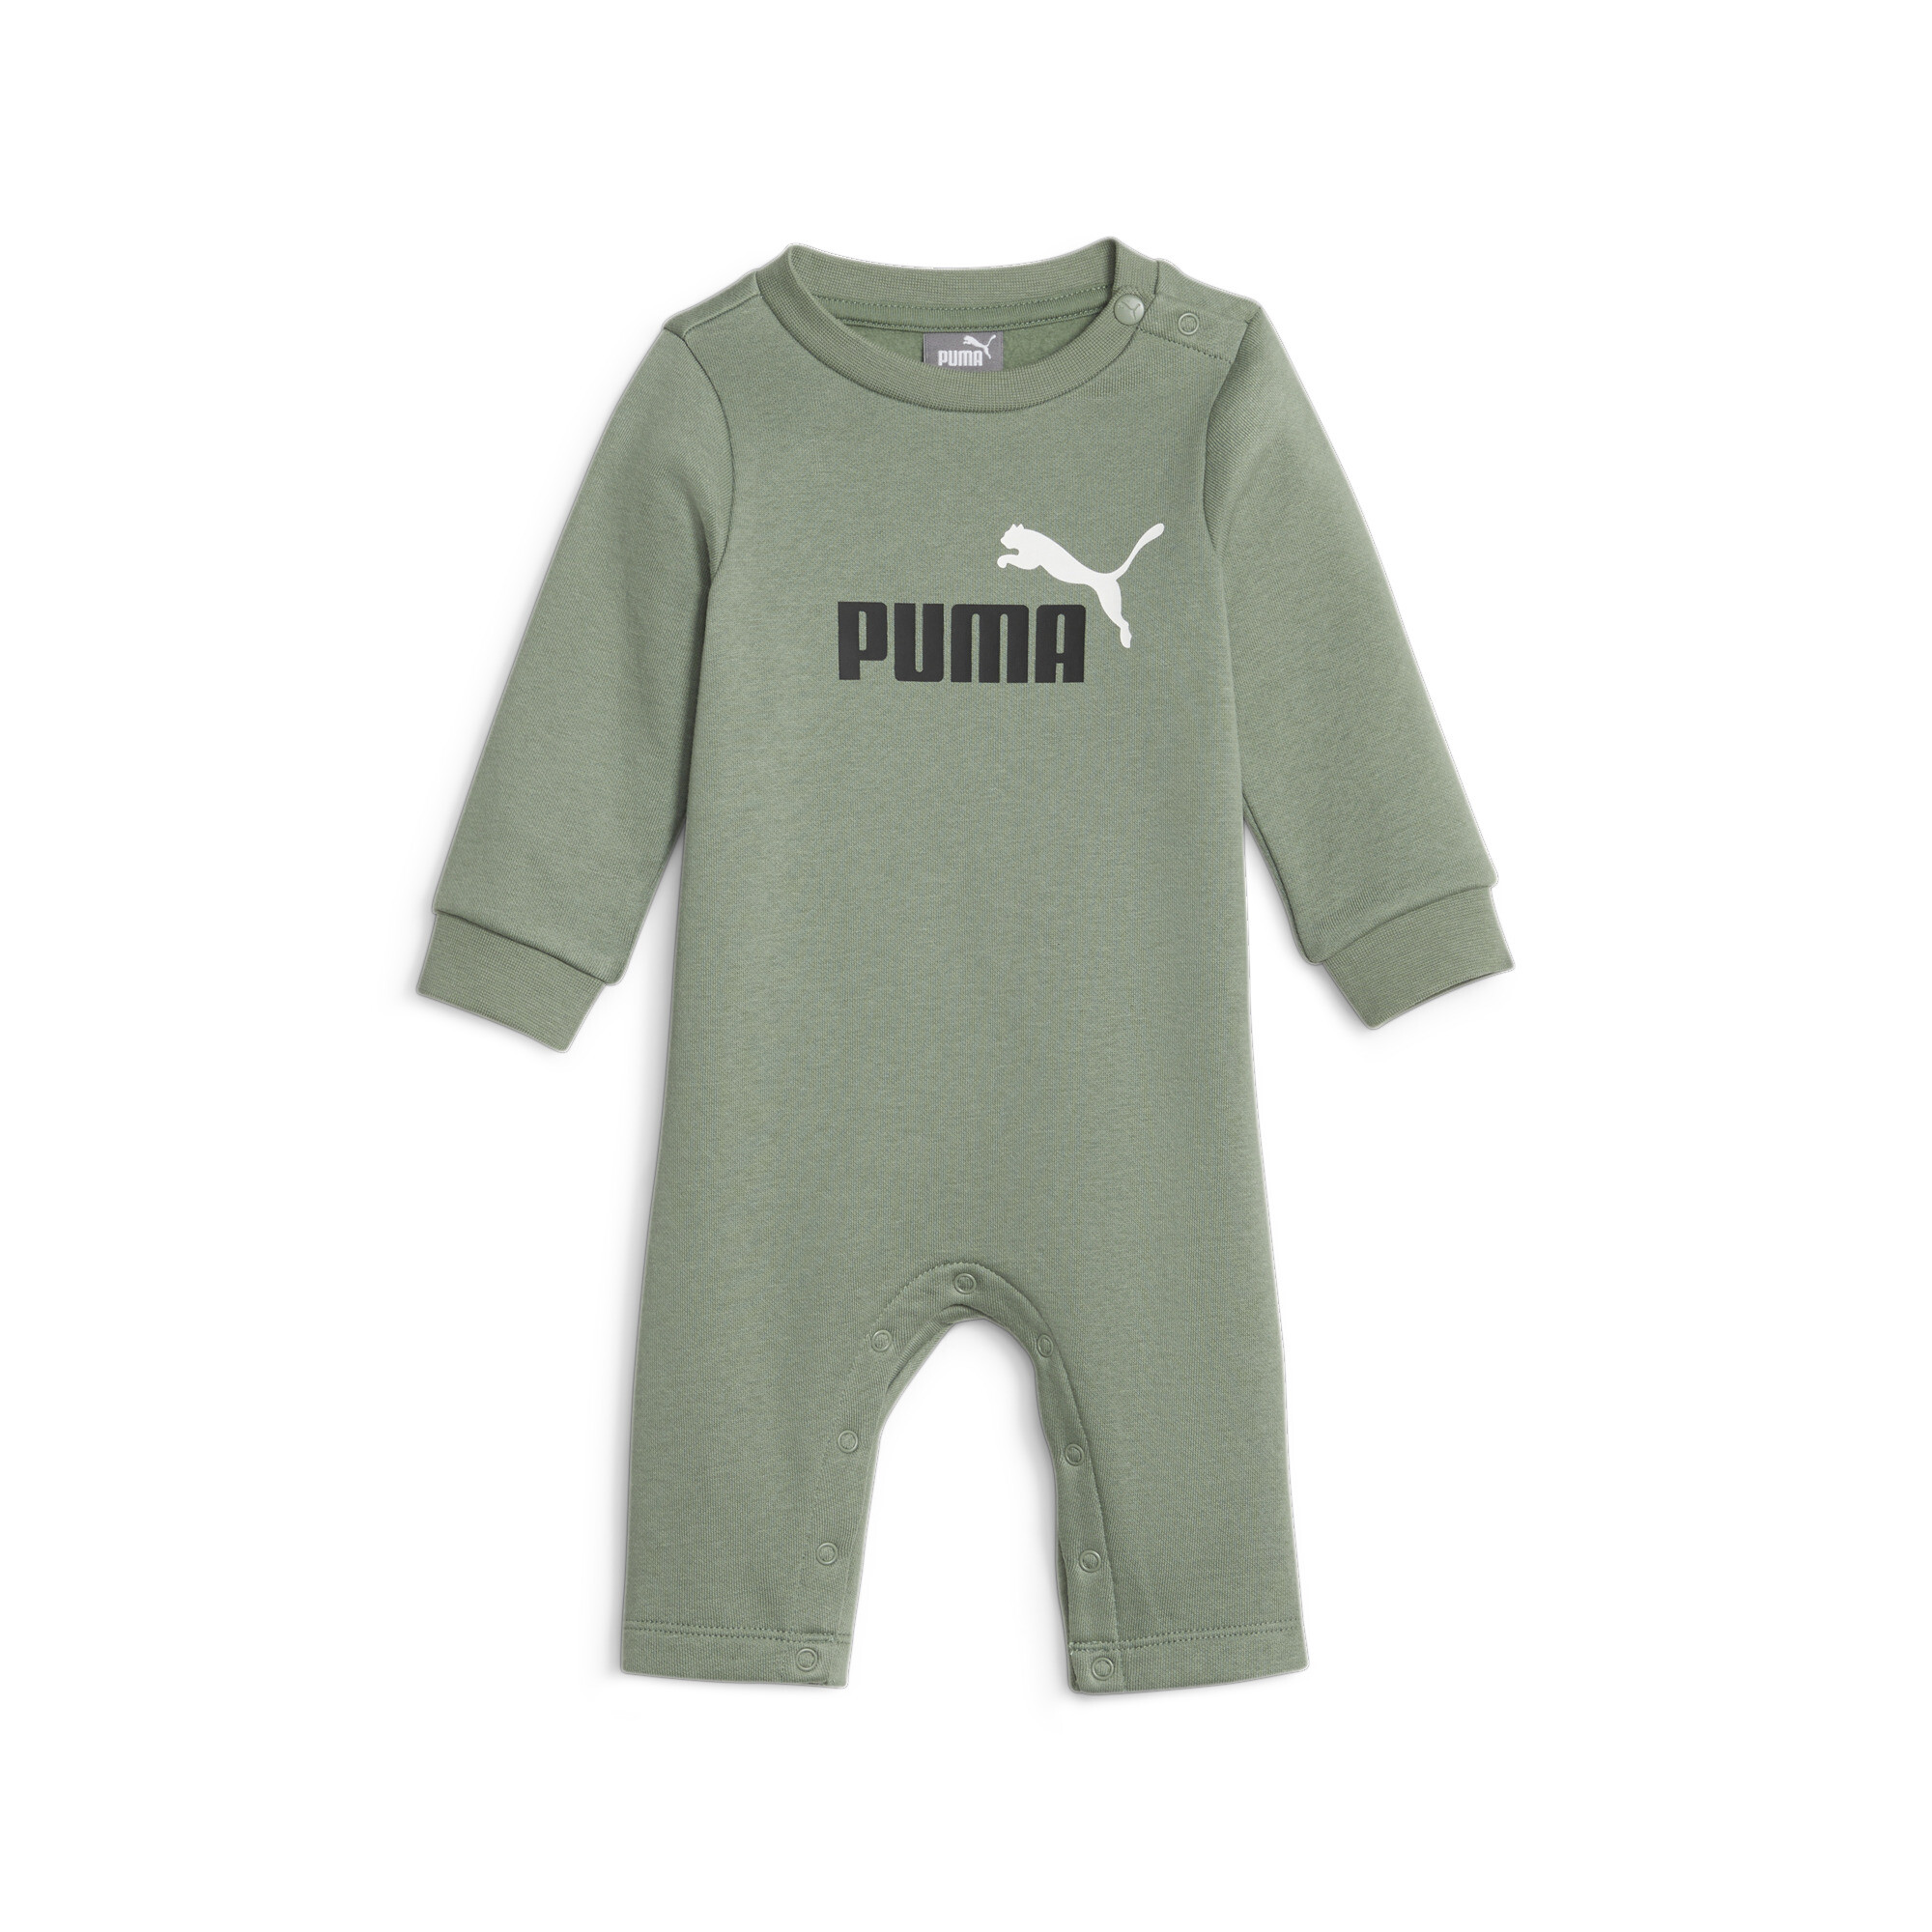 Puma Minicats Newborn Coverall Babies, Green, Size 4-6M, Clothing